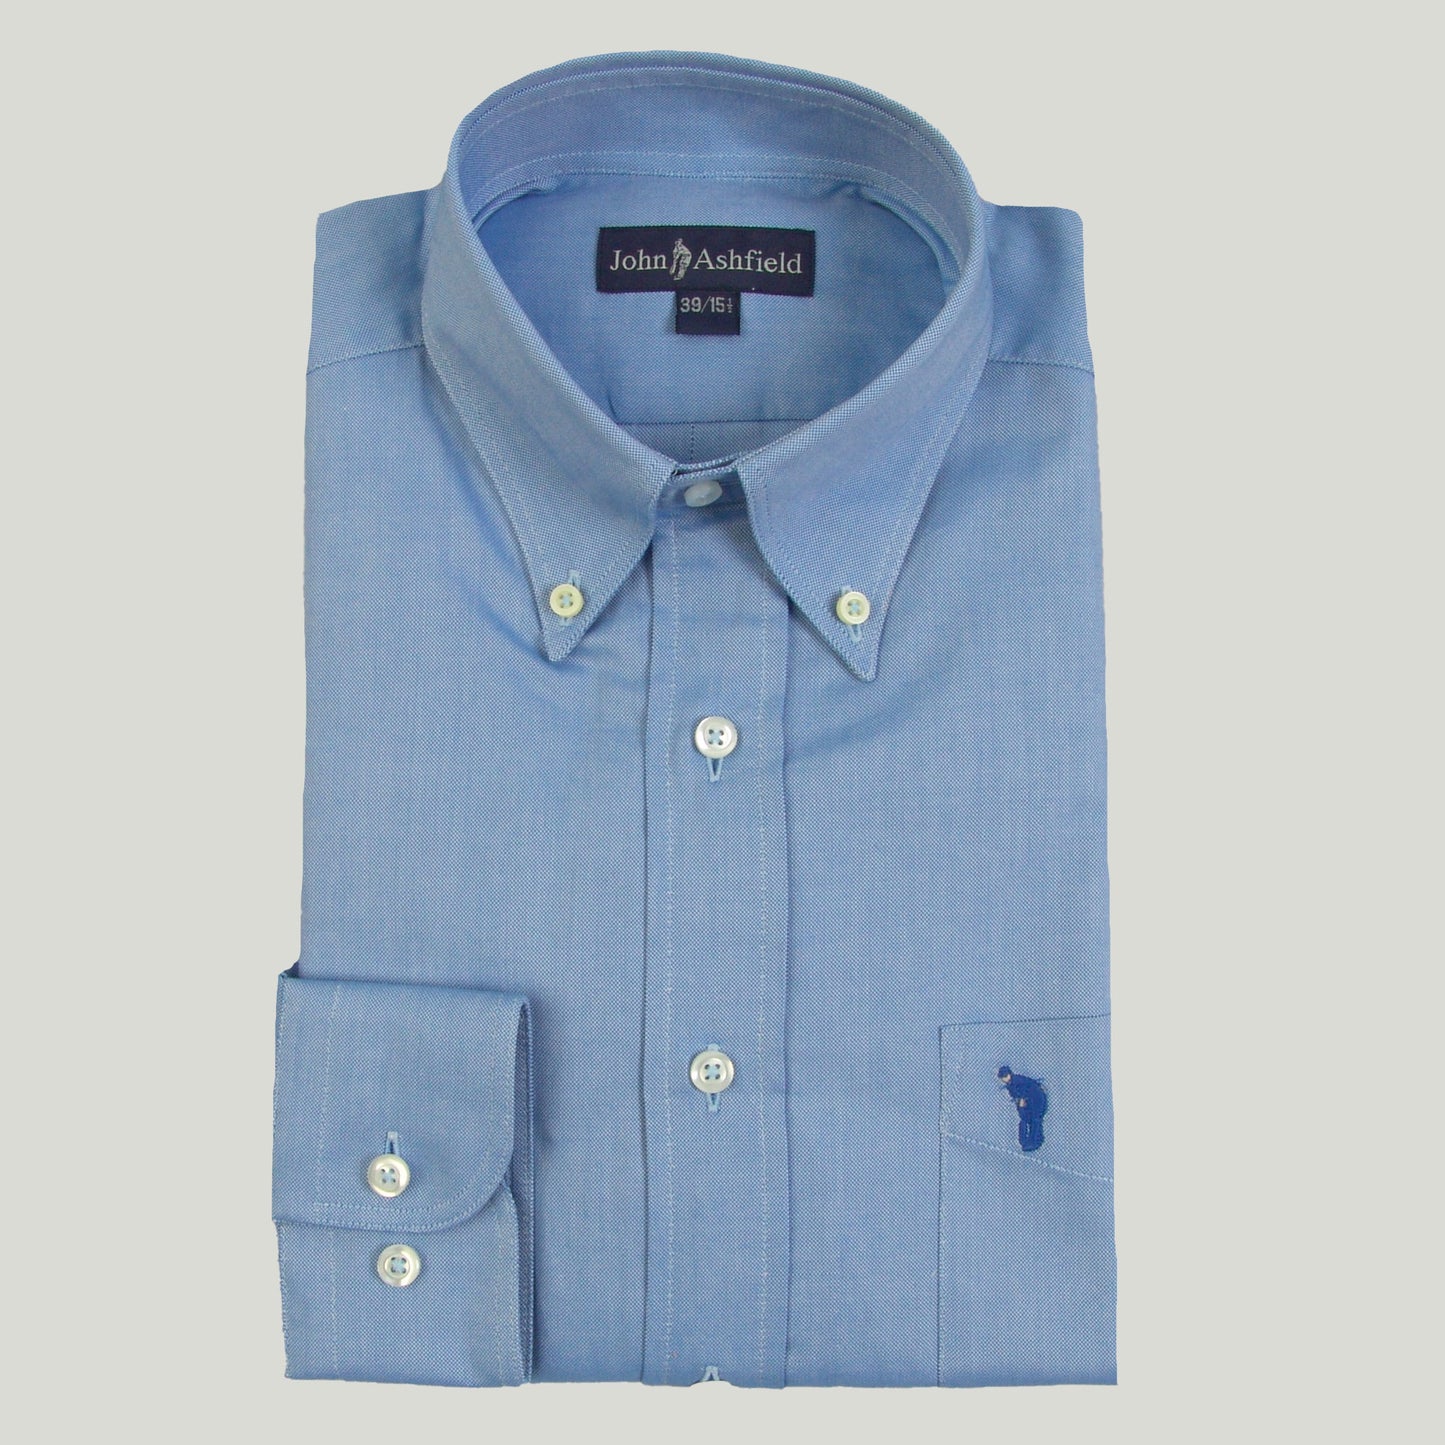 Men's Oxford Button-down shirt